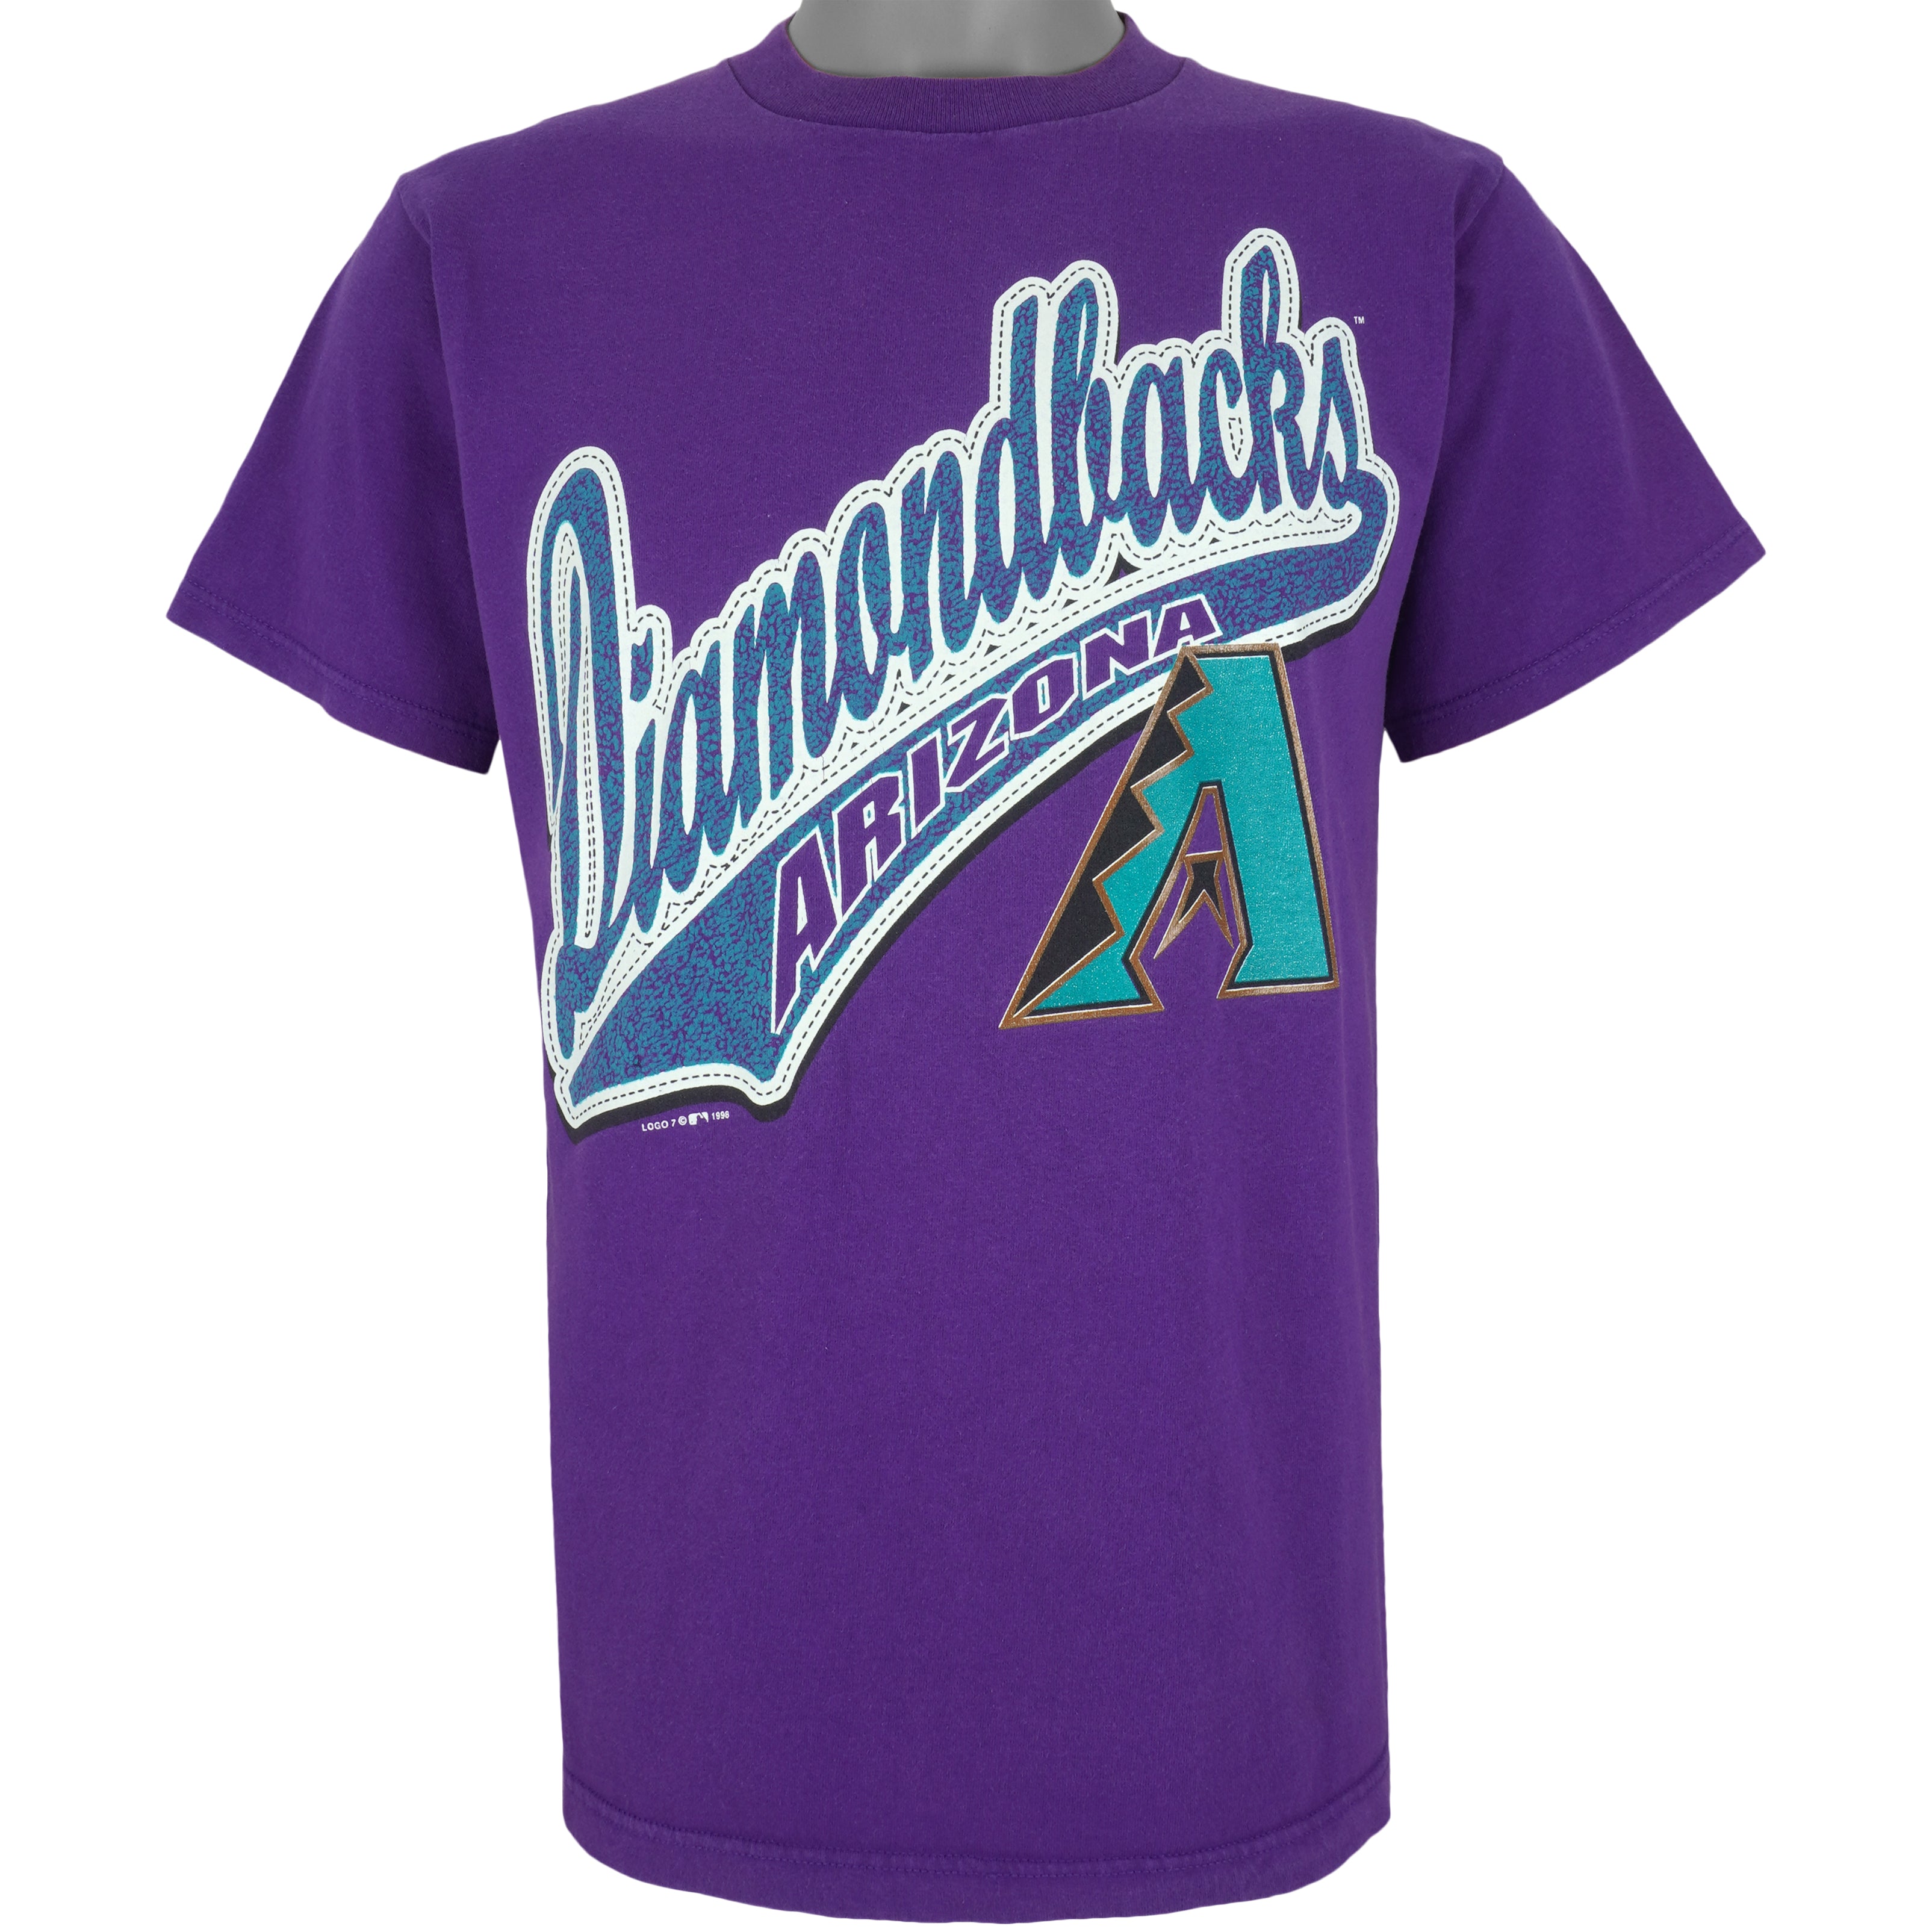 purple diamondbacks shirt